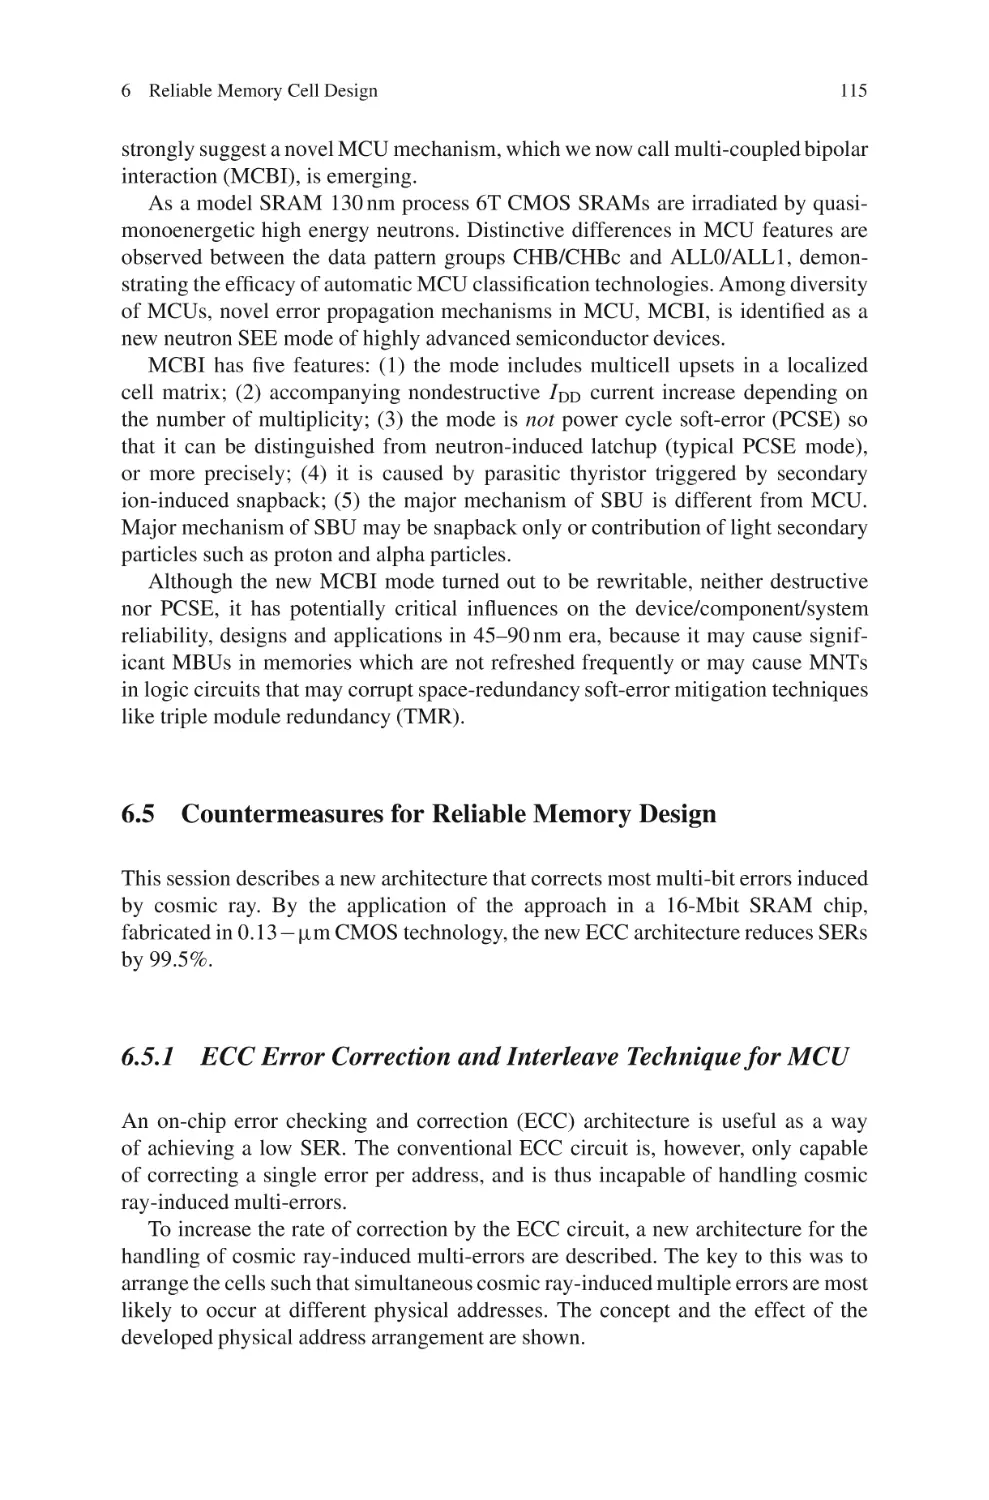 6.5 Countermeasures for Reliable Memory Design
6.5.1 ECC Error Correction and Interleave Technique for MCU